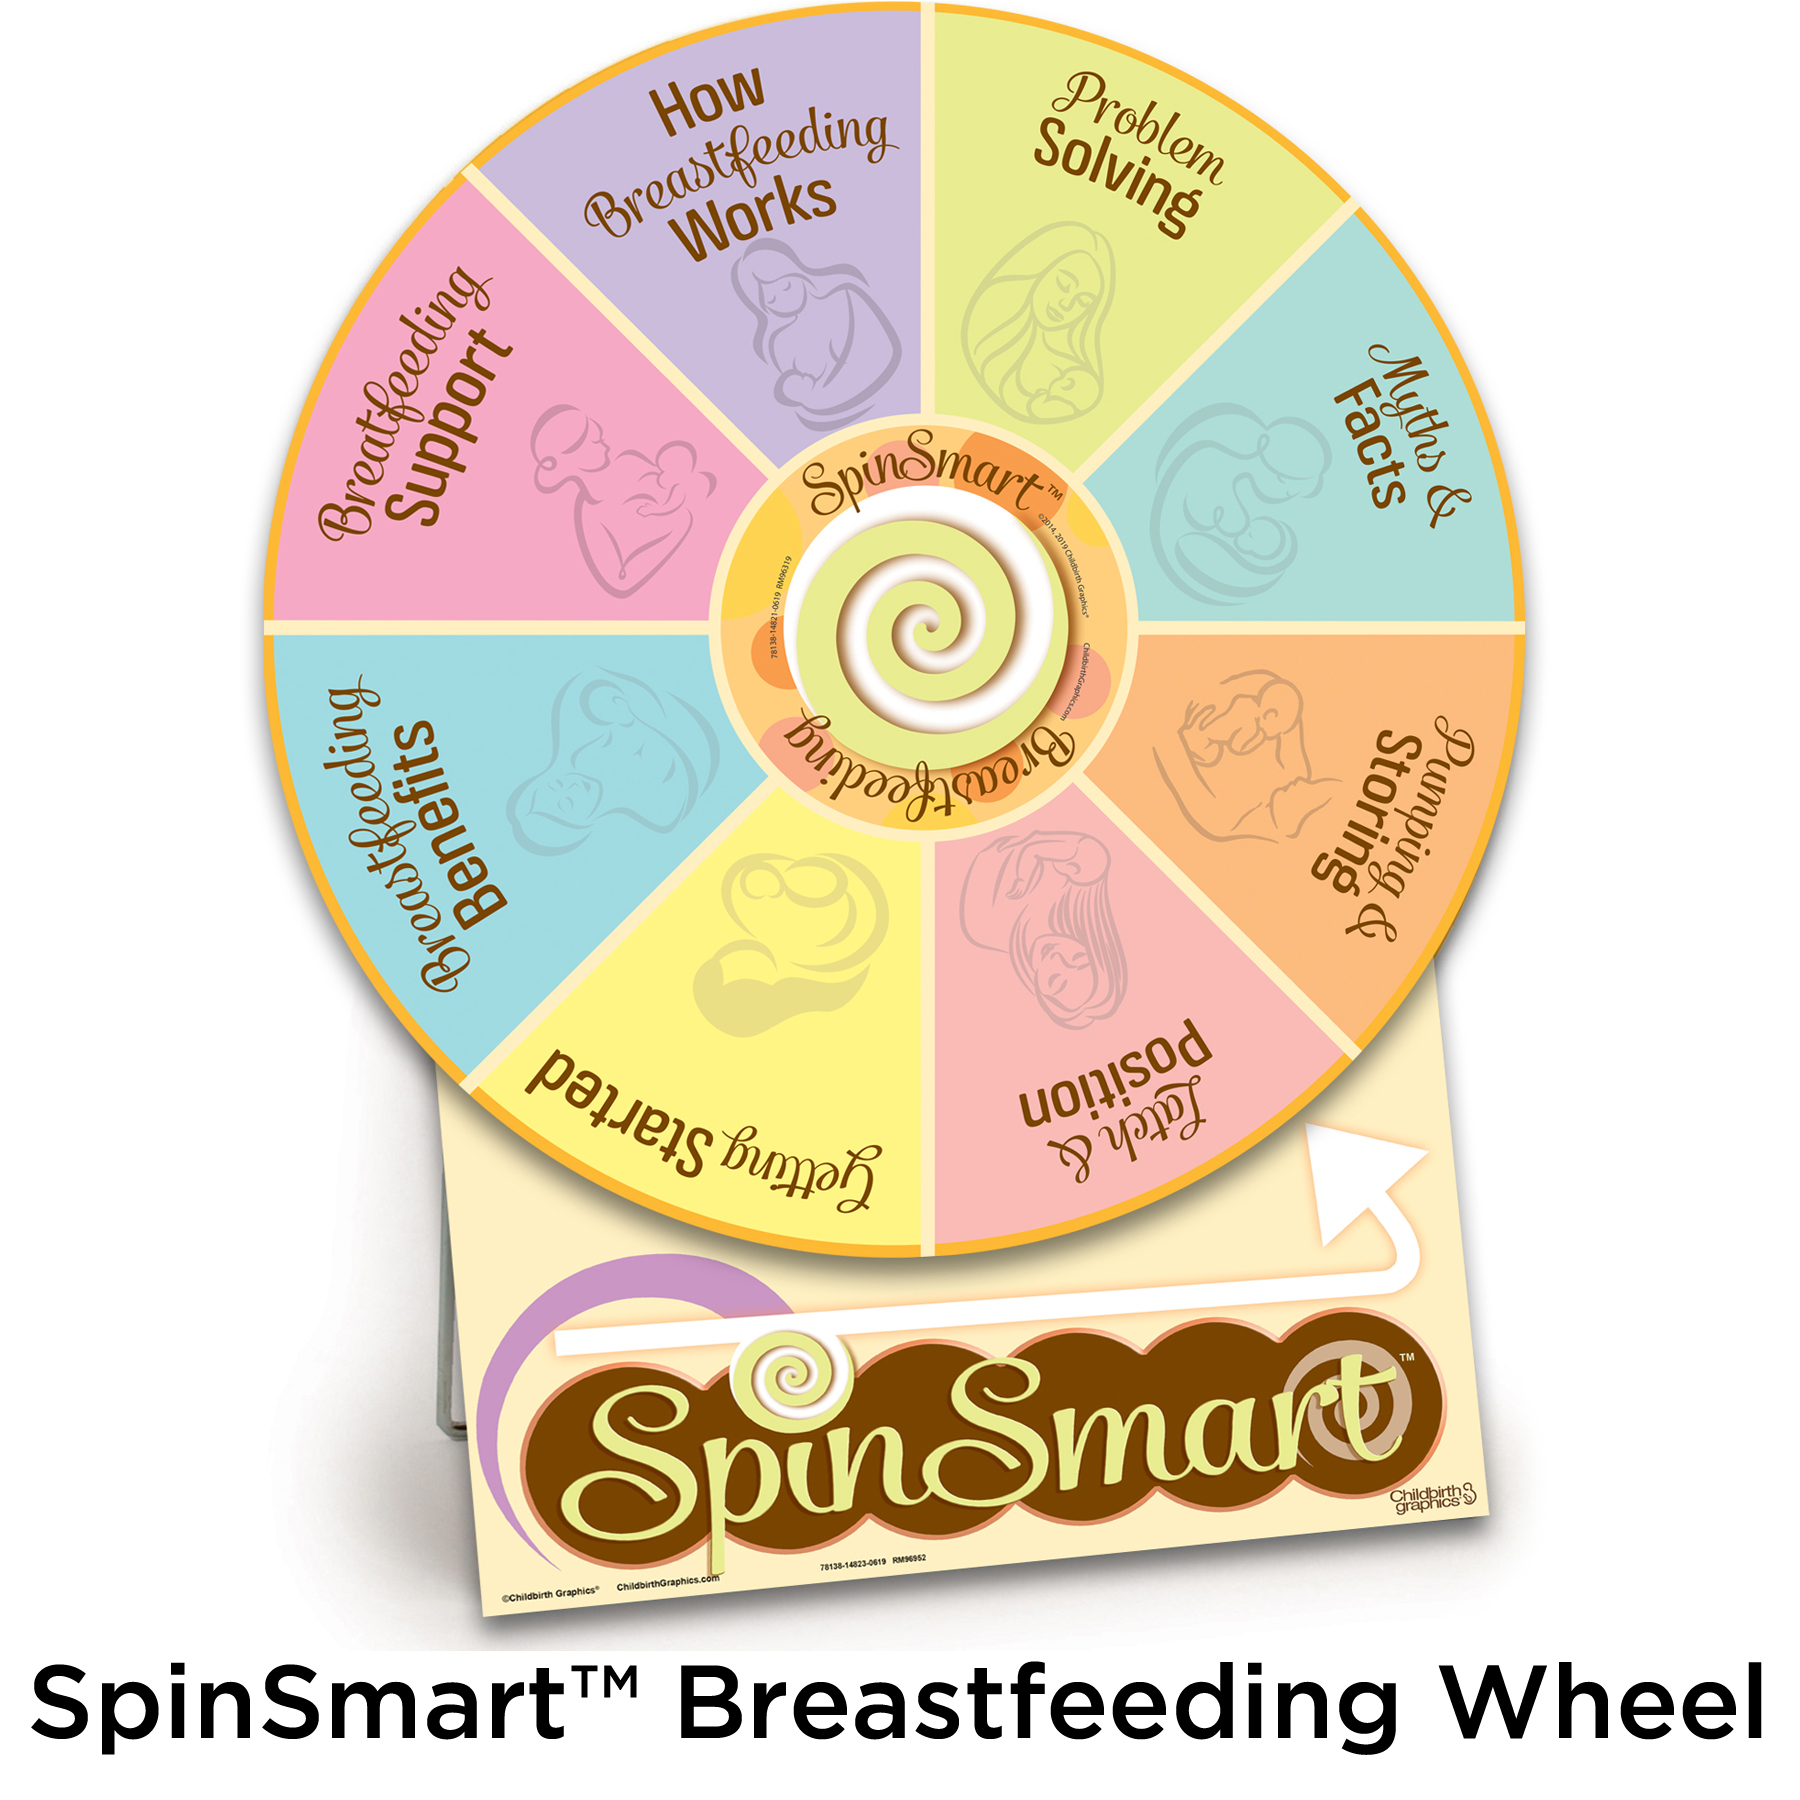 SpinSmart Breastfeeding Wheel from Childbirth Graphics, 78138